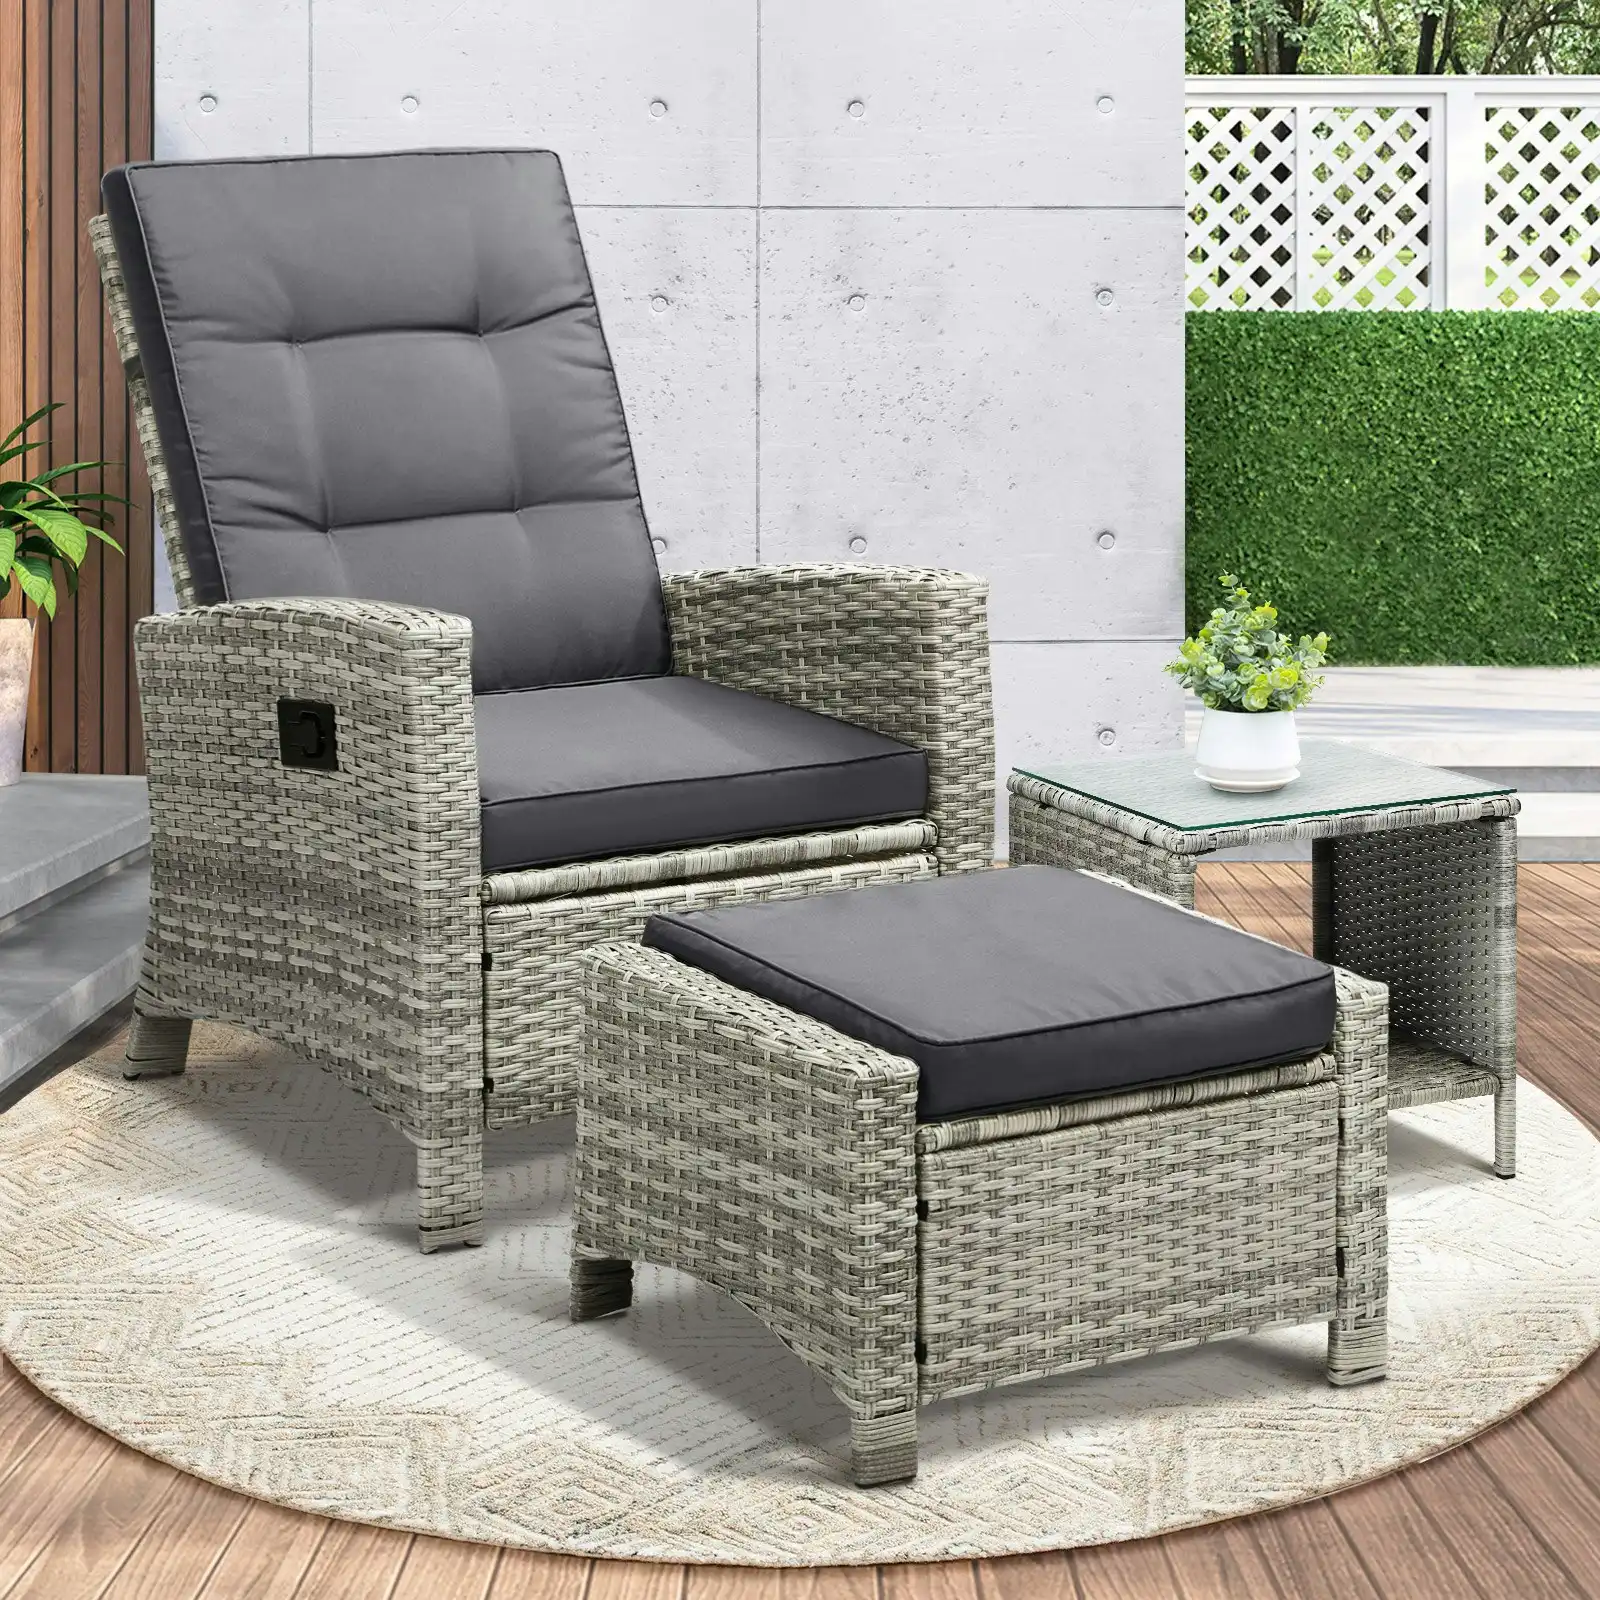 Livsip Recliner Chair Outdoor Sun Lounge Setting Wicker Sofa Patio Furniture 3PC